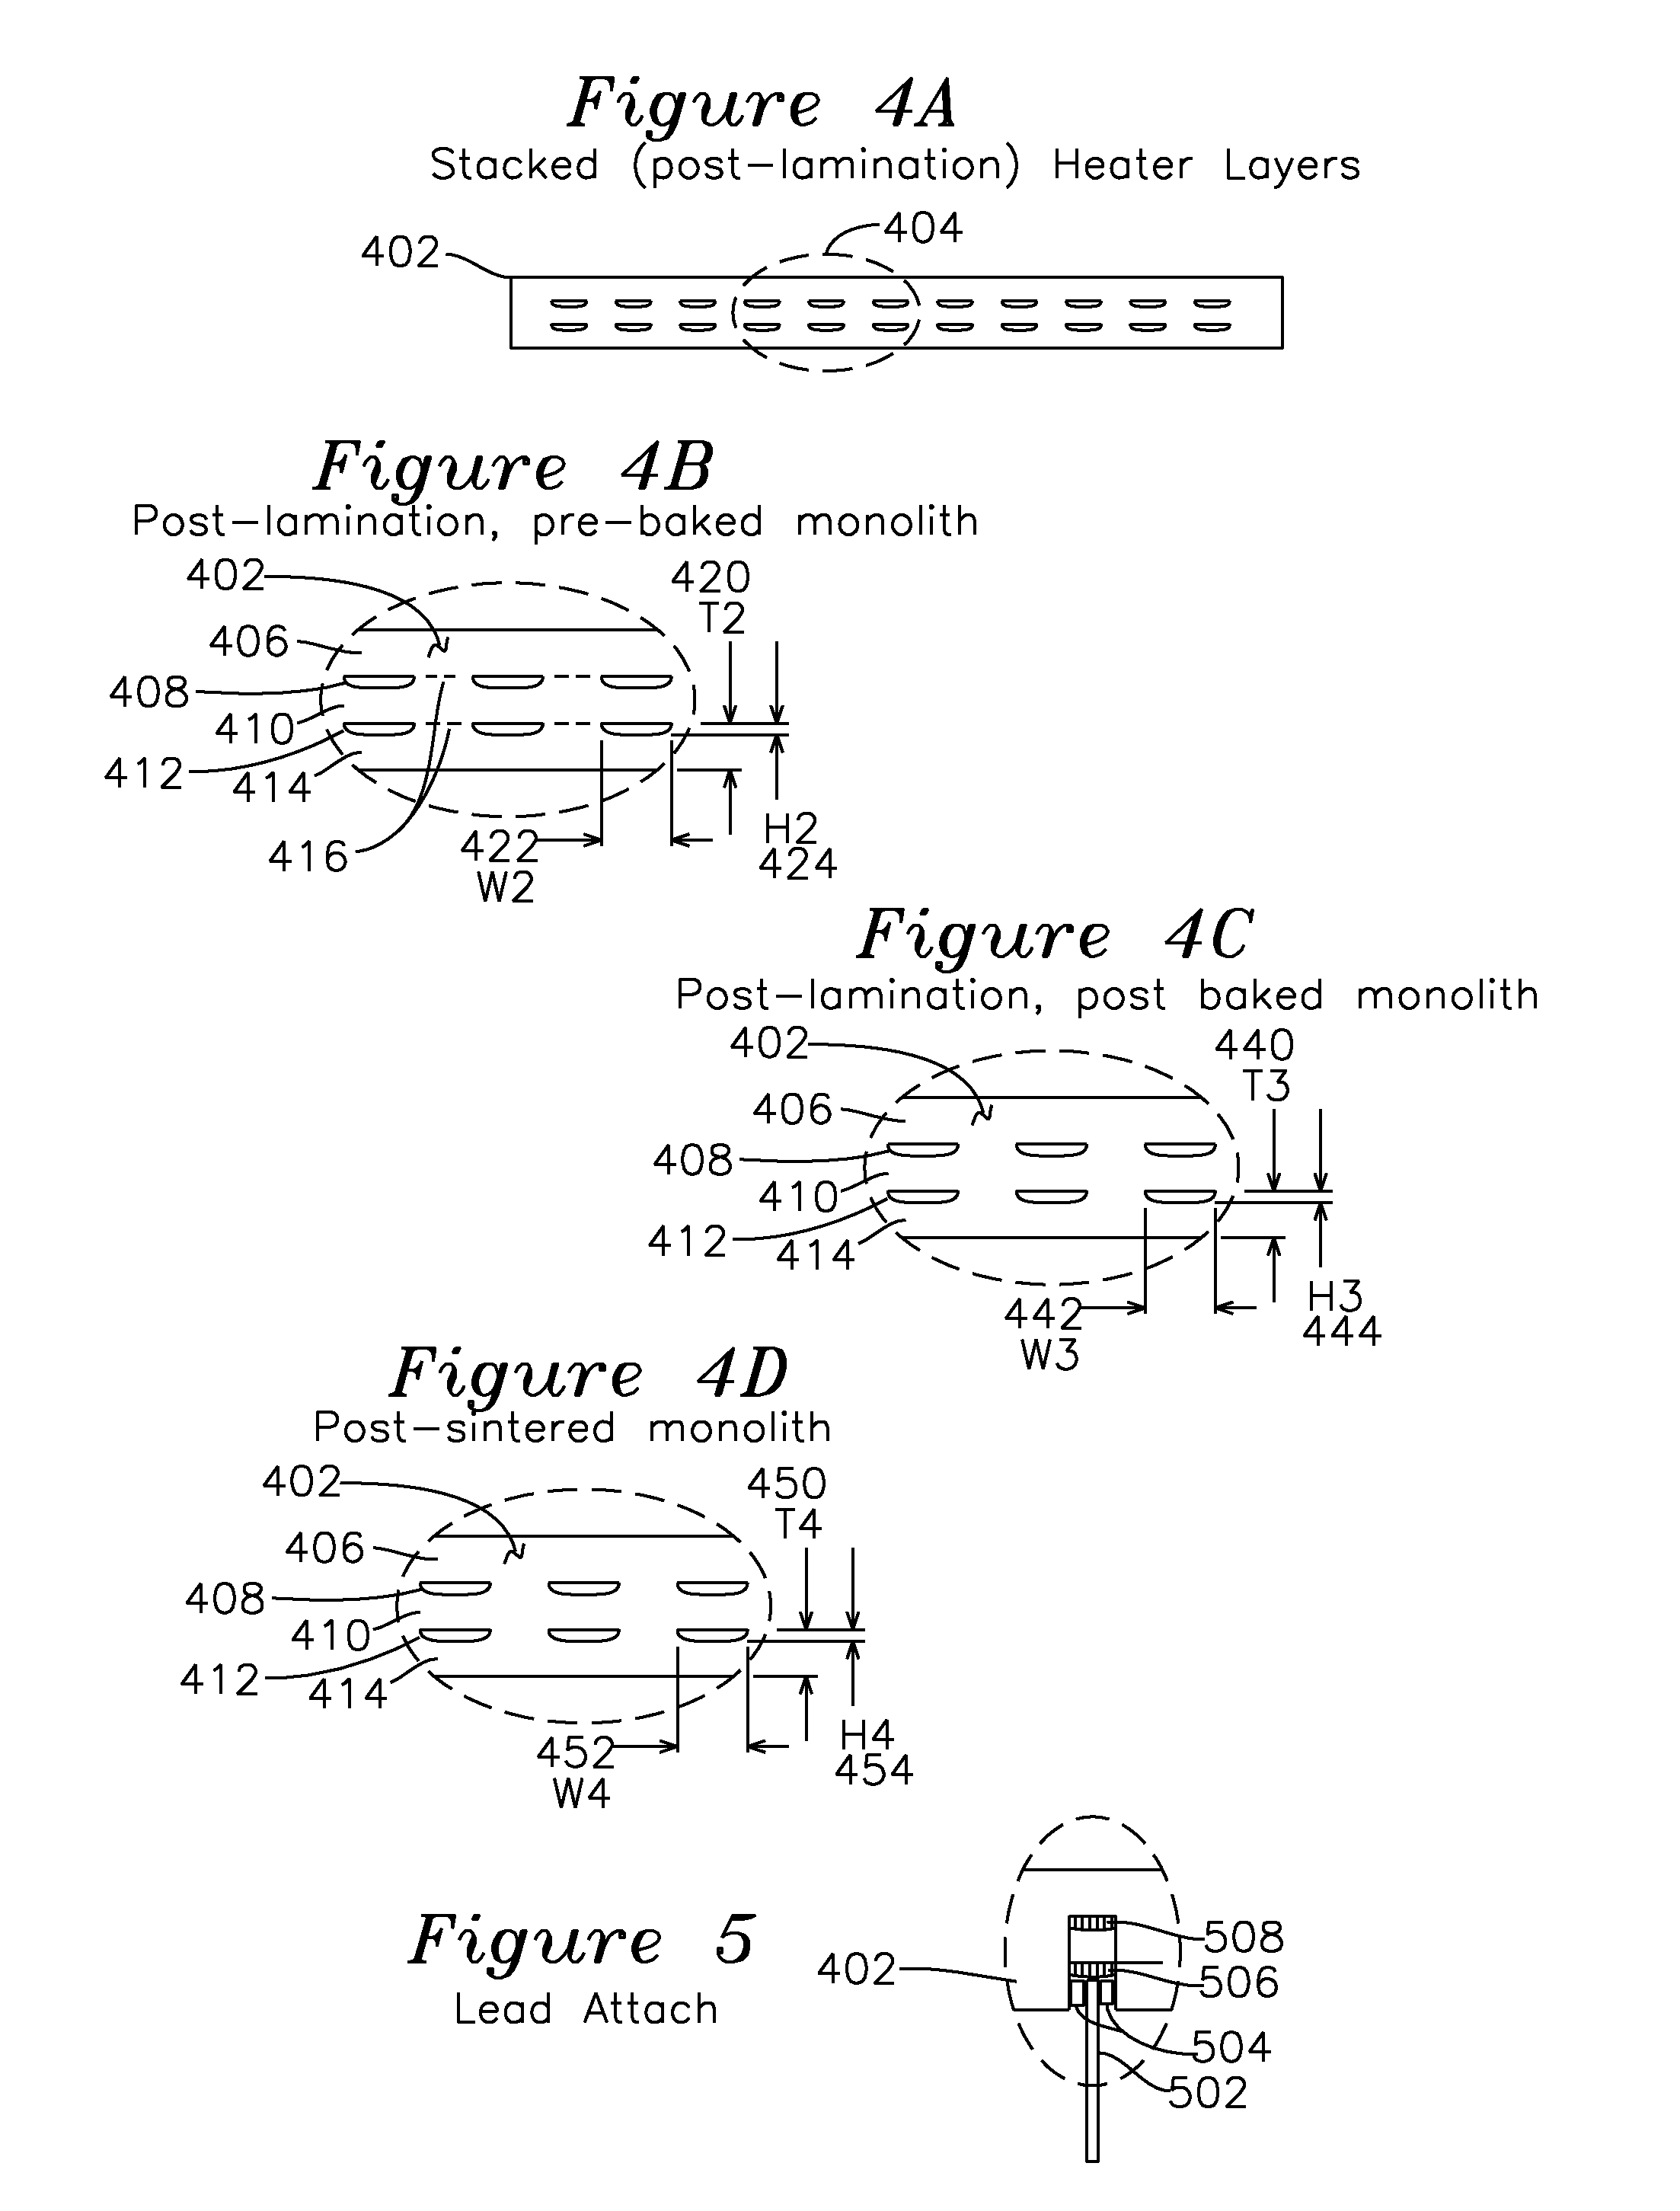 Multi-layer heater for an electron gun